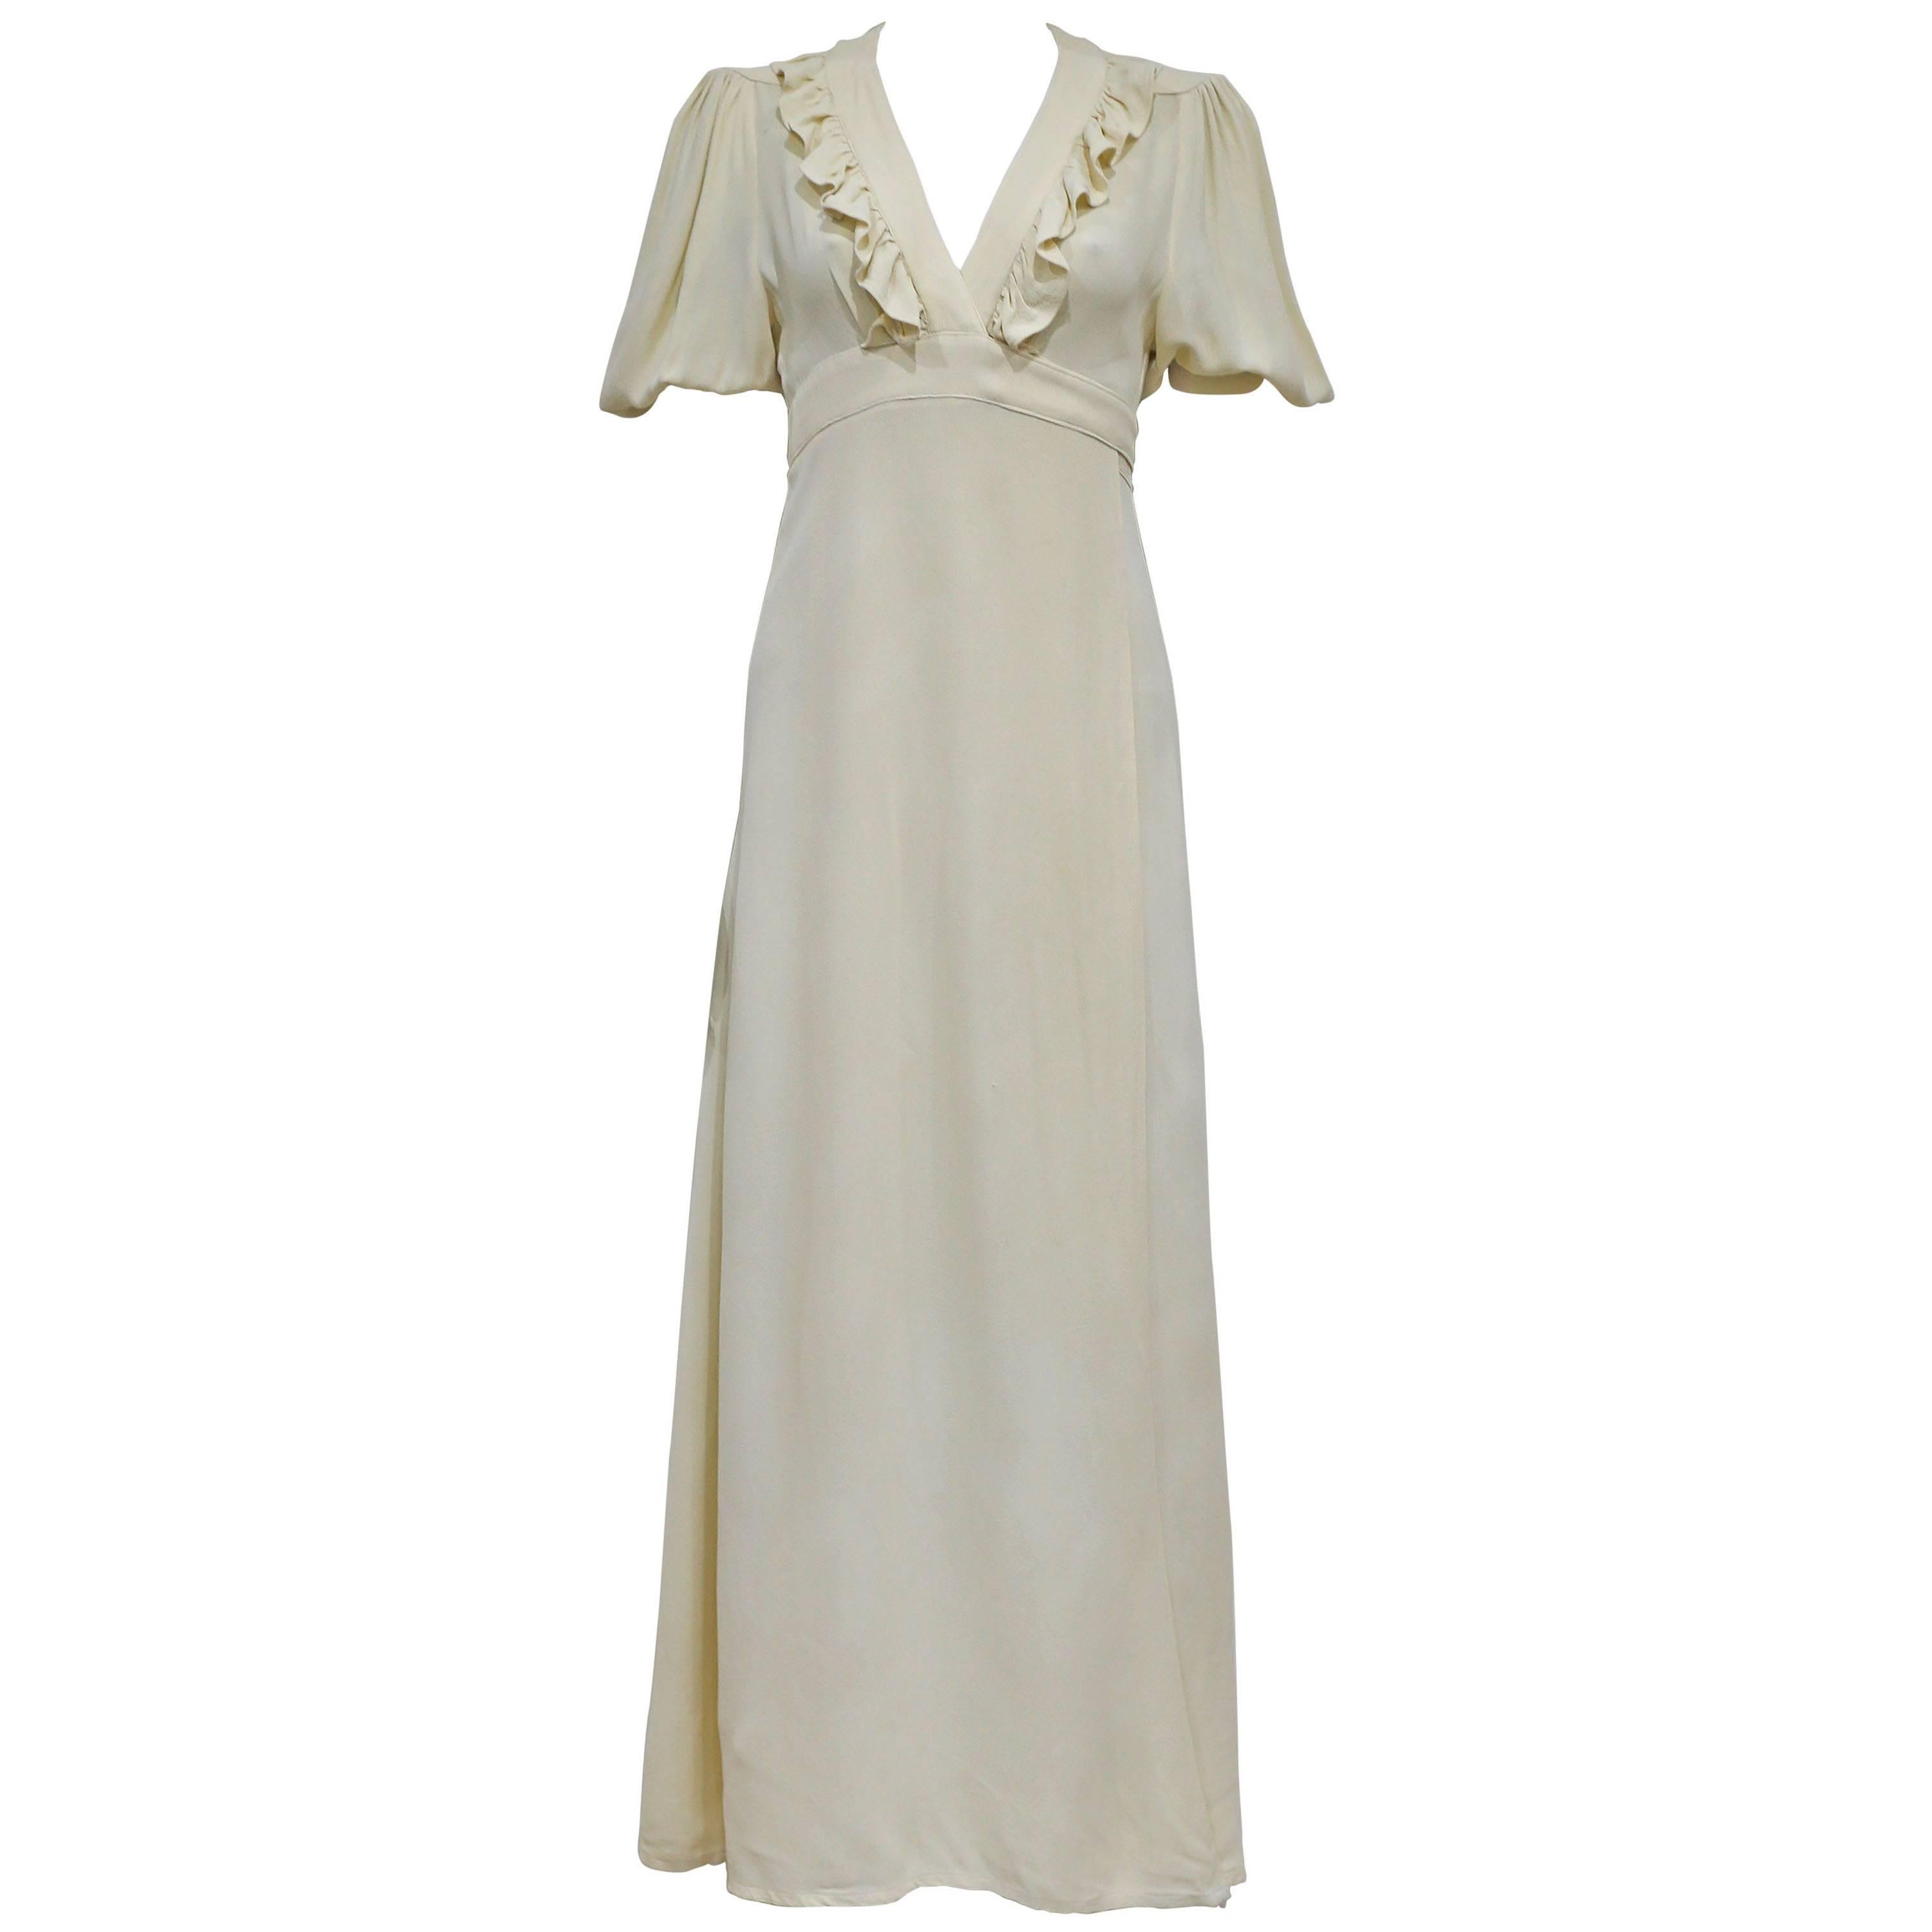 Ossie Clark for Radley moss crepe cream wrap dress, c. 1970s at 1stDibs